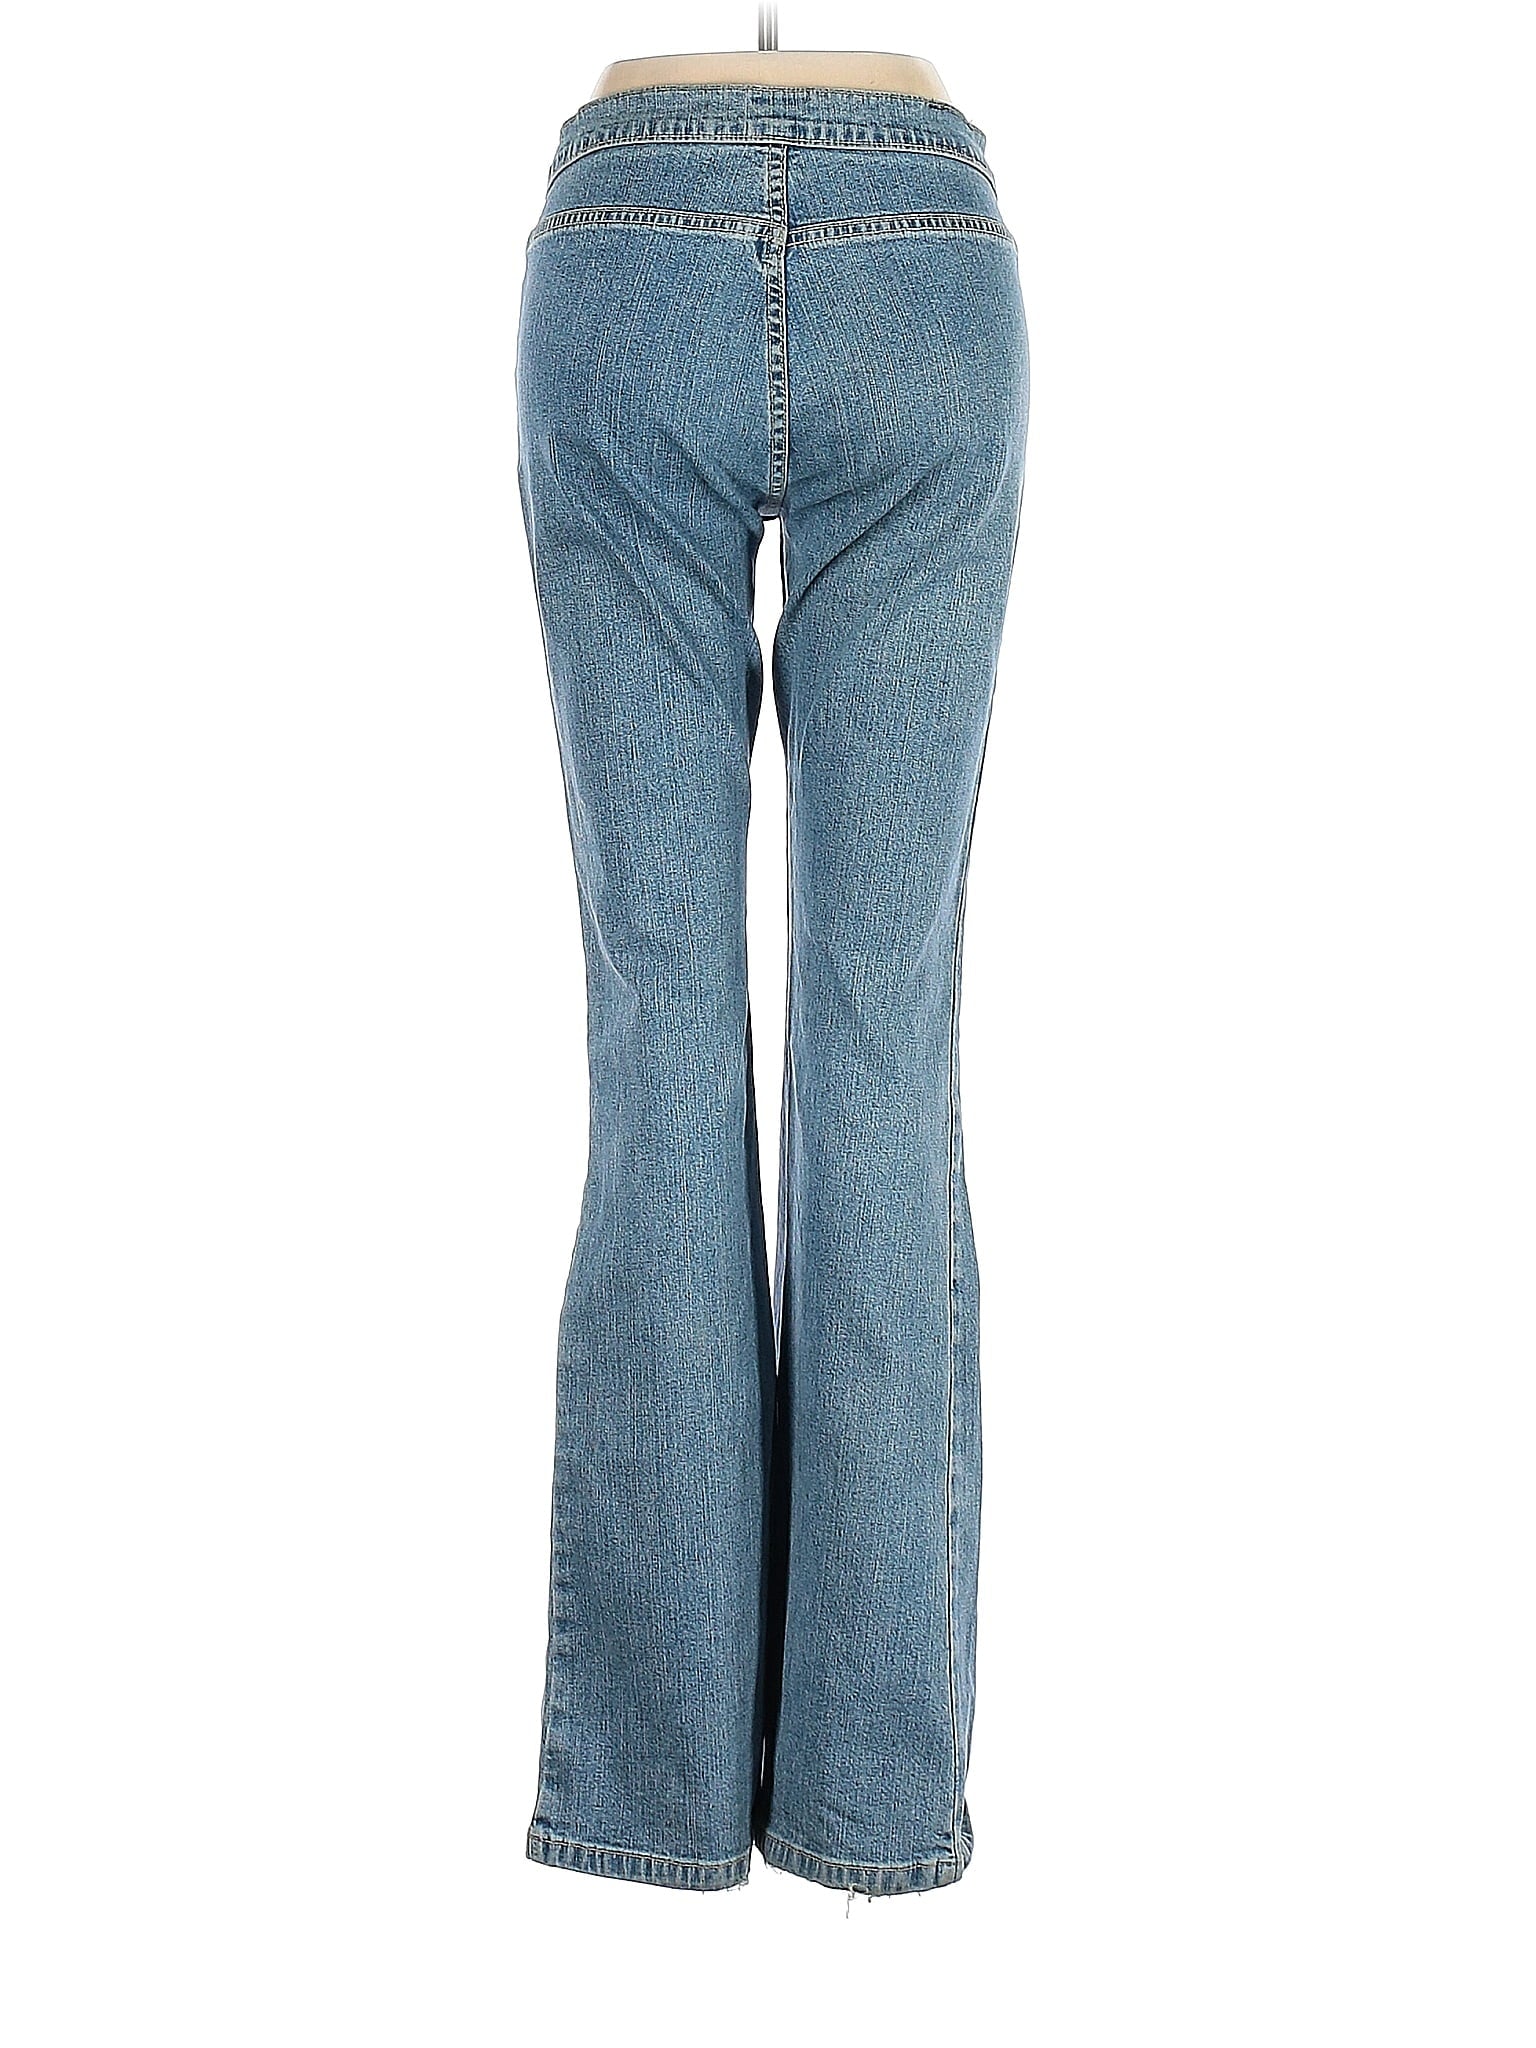 Jeans size - 7